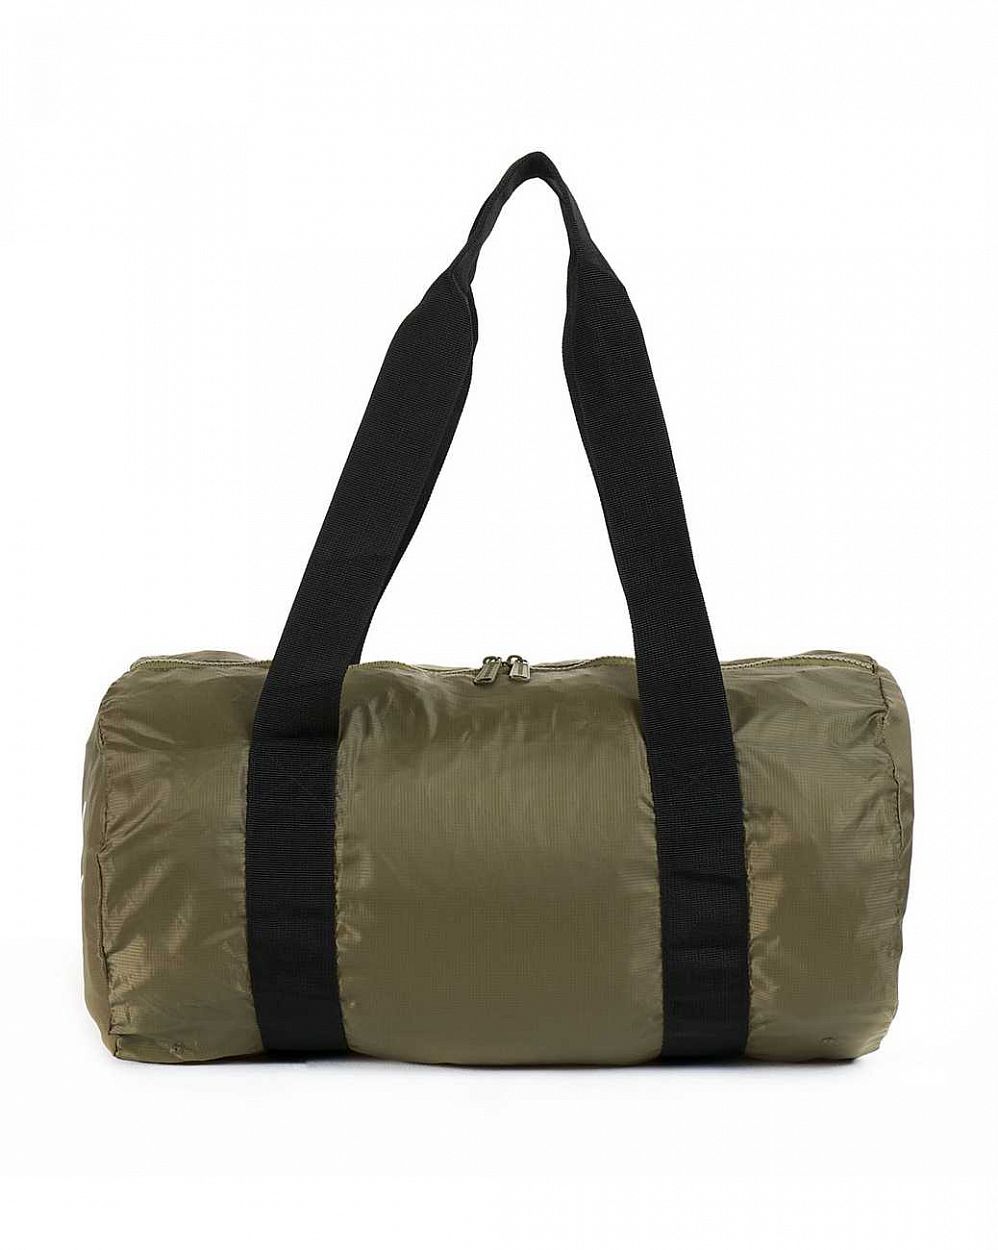 Сумка складная Herschel Packable Duffle Bag Army Black отзывы